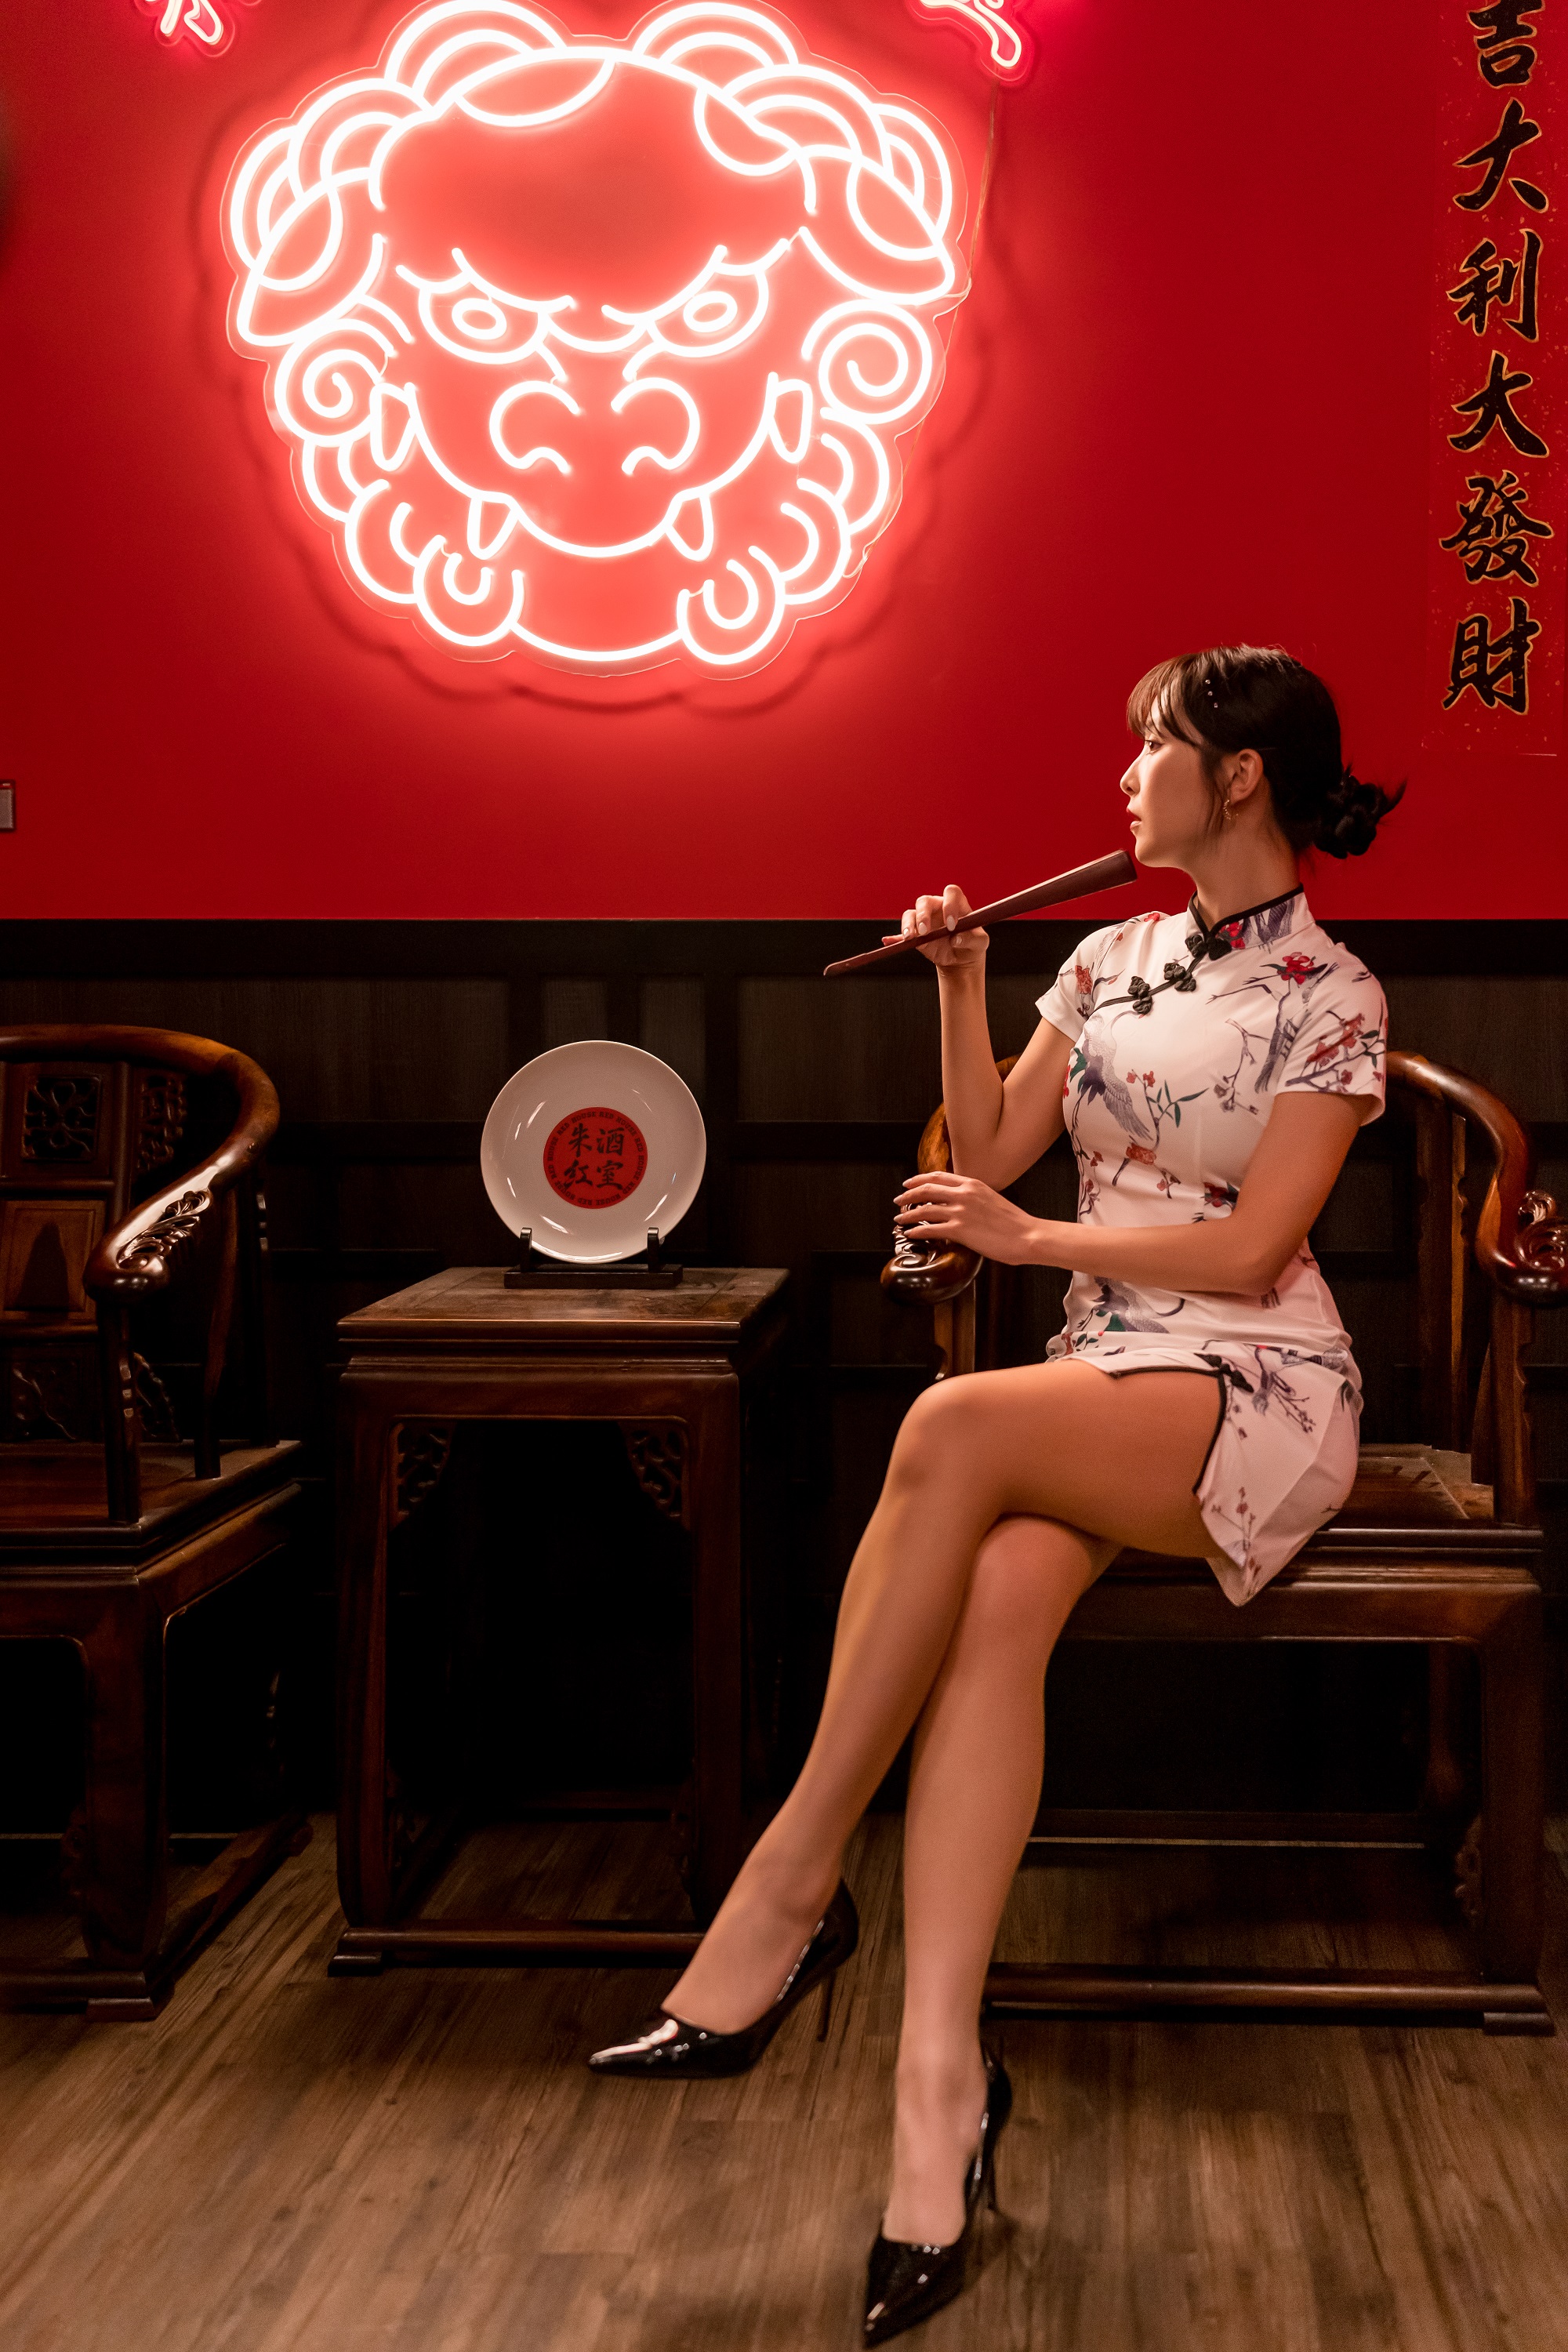 UMAX Boren Women Asian Cheongsam Legs Crossed Restaurant Heels Portrait Display 2000x3000